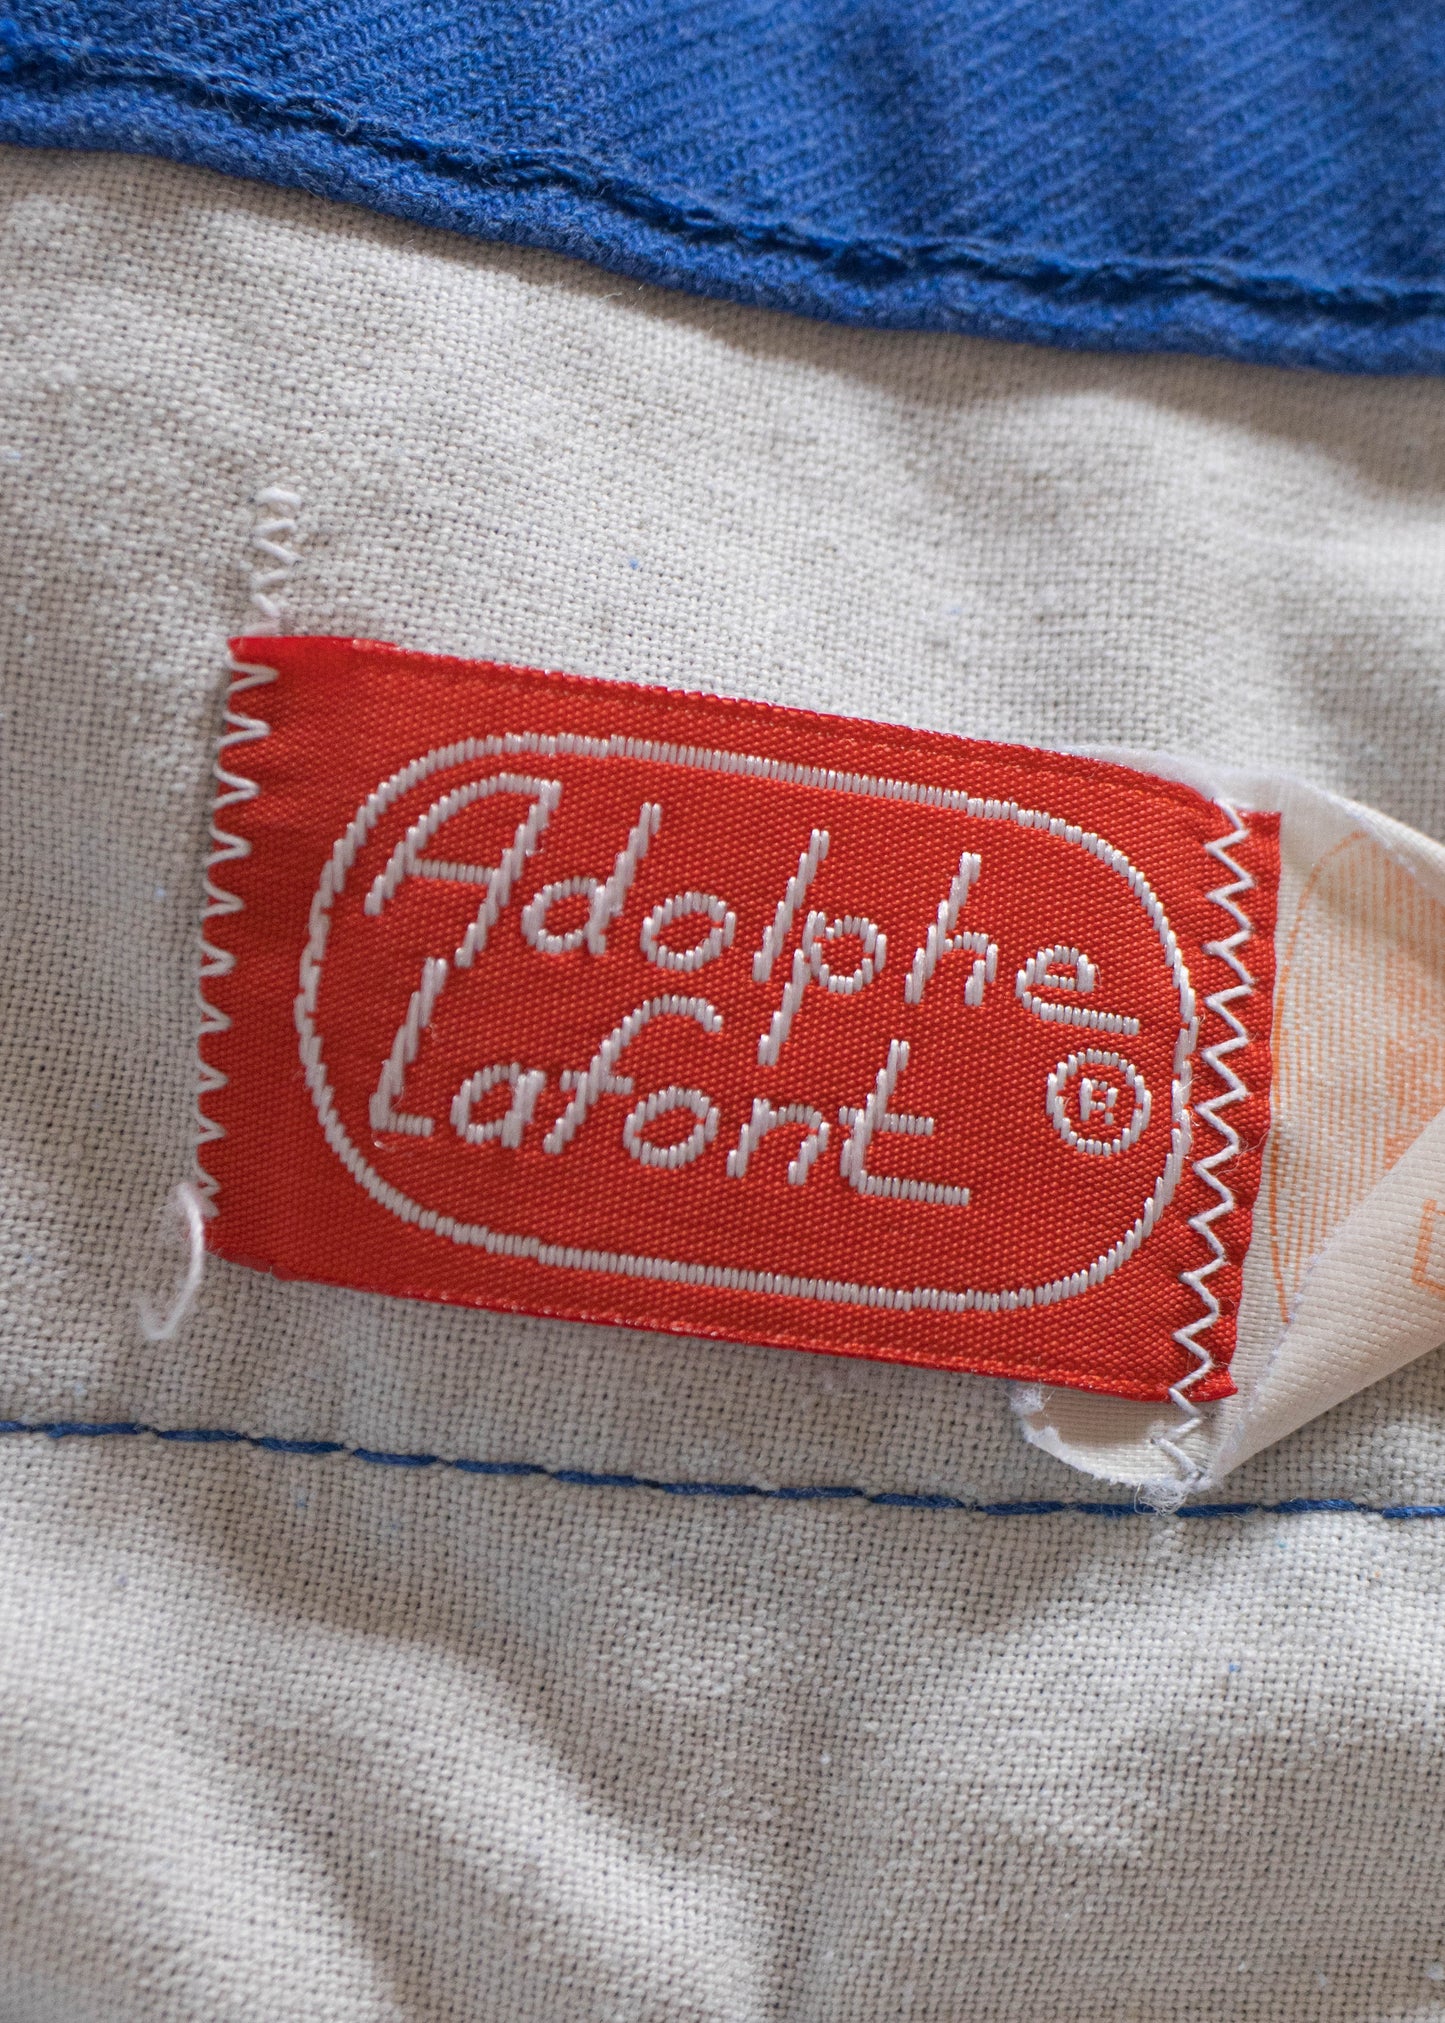 1980s Adolphe Lafont French Workwear Chore Pants Size Women's 33 Men's 36